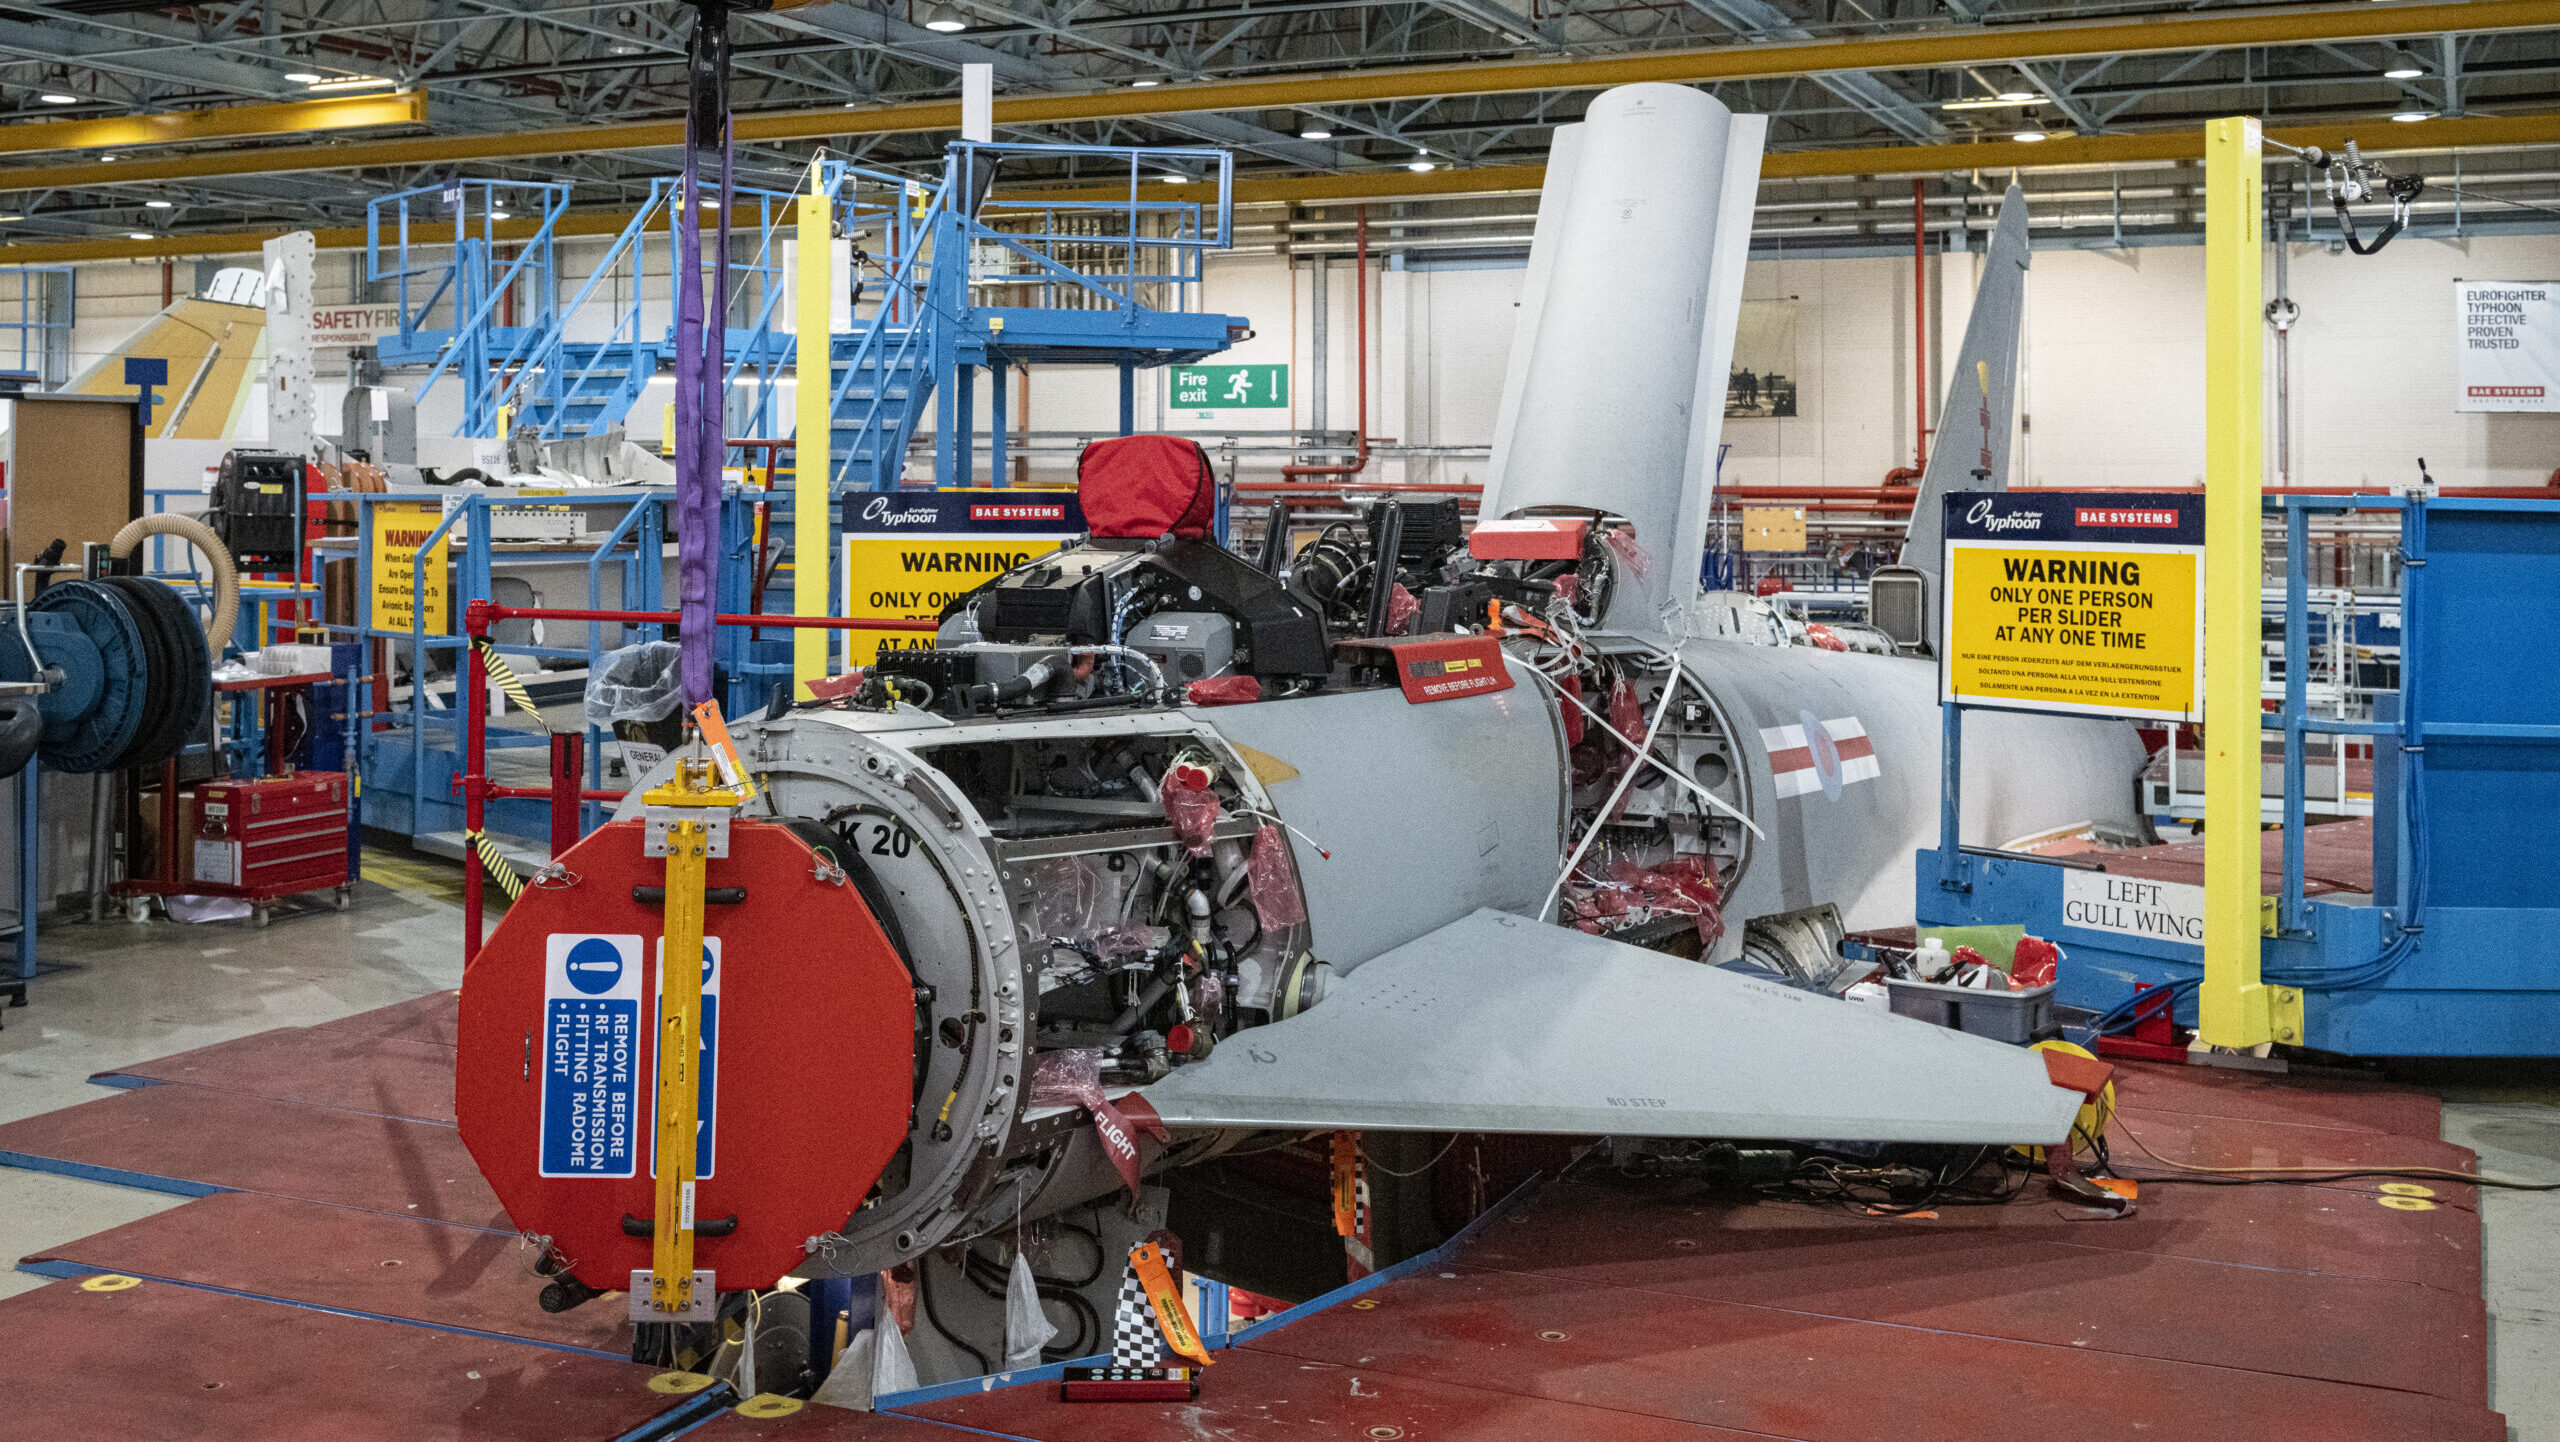 UK begins next-gen Eurofighter Typhoon radar integration, eyeing ‘powerful’ EW capabilities